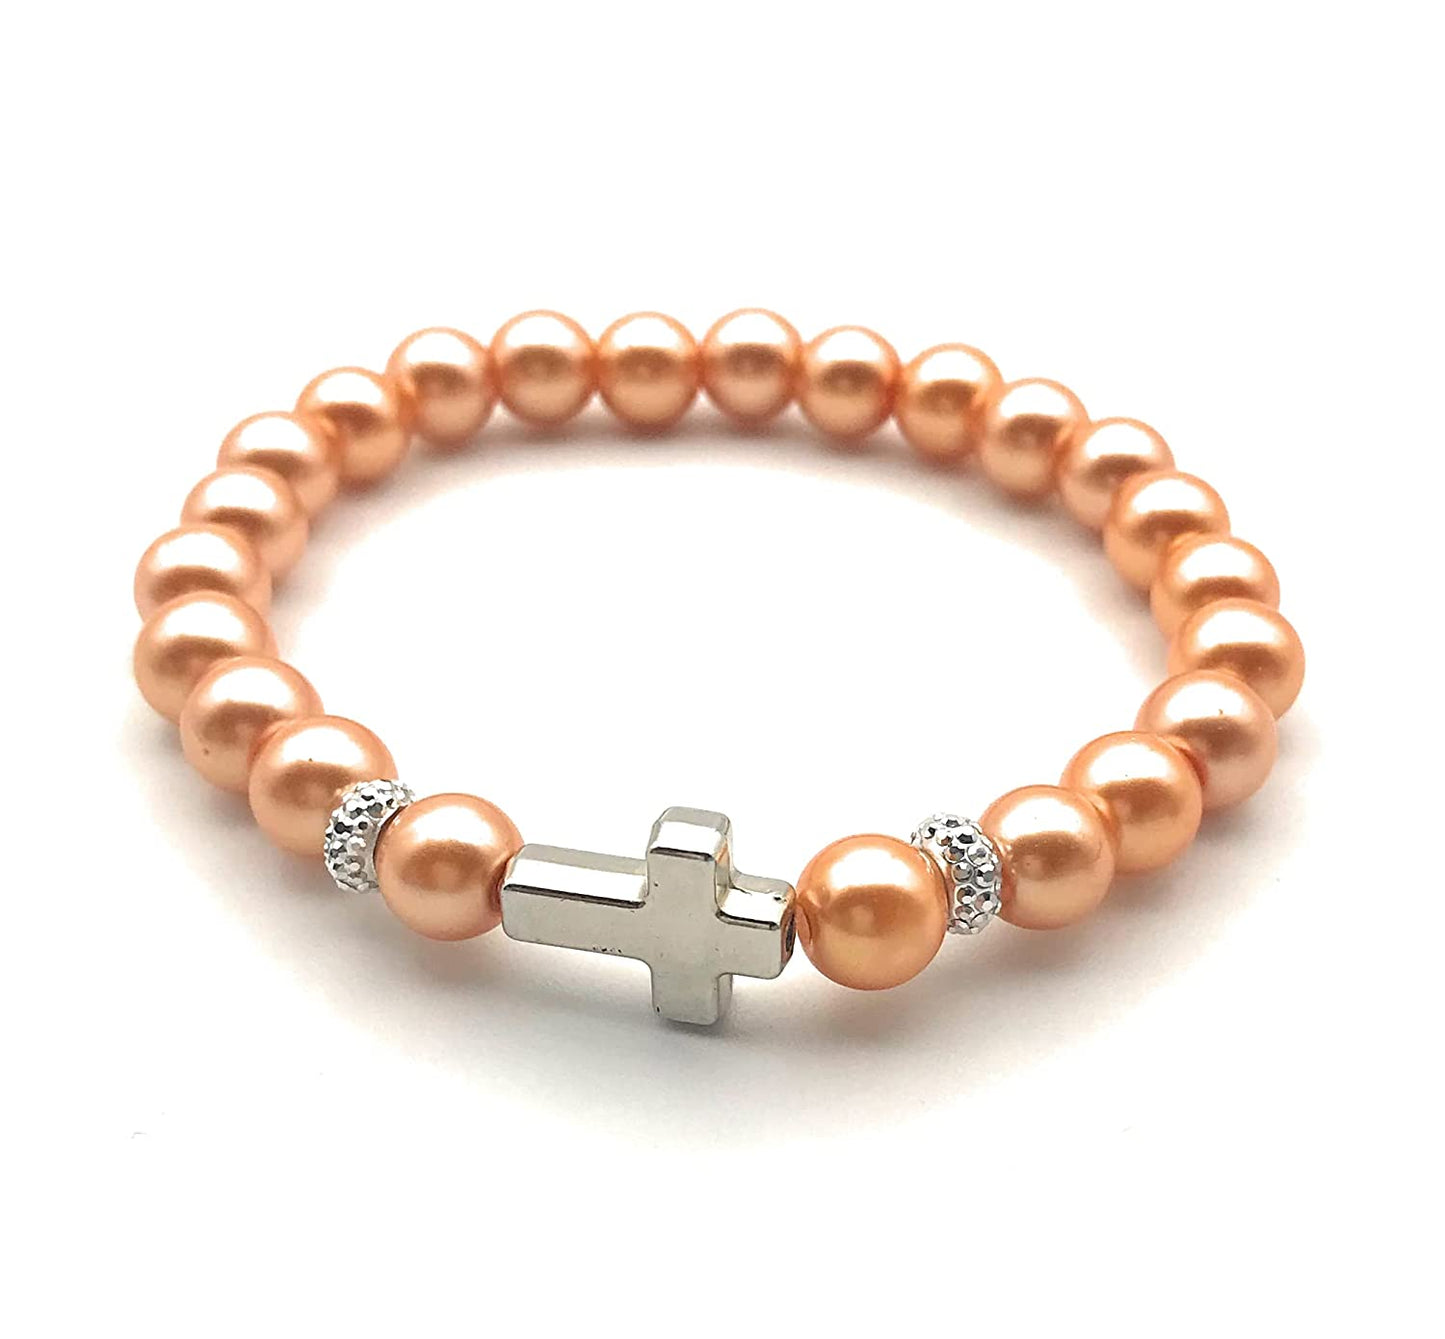 Silver Cross Bracelet with Vibrant Orange Beads